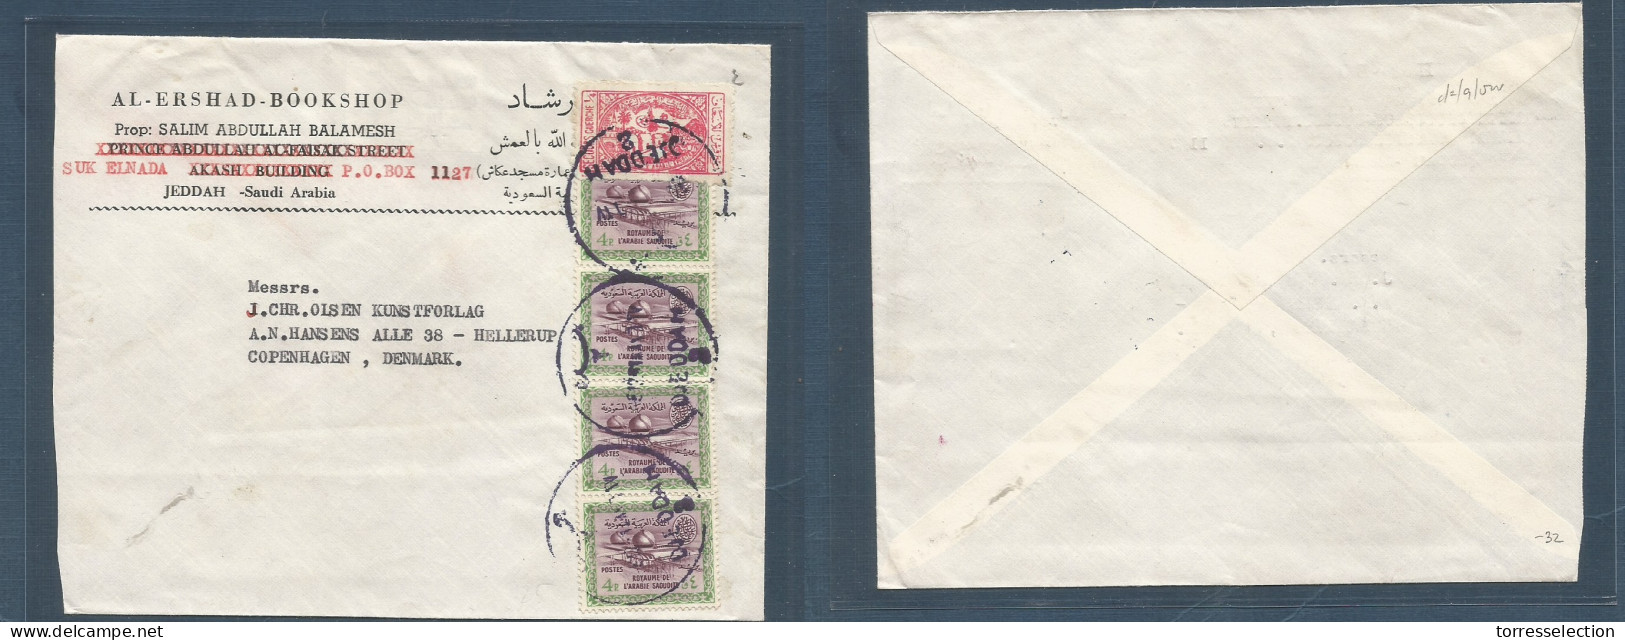 SAUDI ARABIA. 1951. Jeddah - Denmark, Cph. Comercial Multifkd Env Including Benefic Label, Tied Cds. Fine. XSALE. - Saudi-Arabien